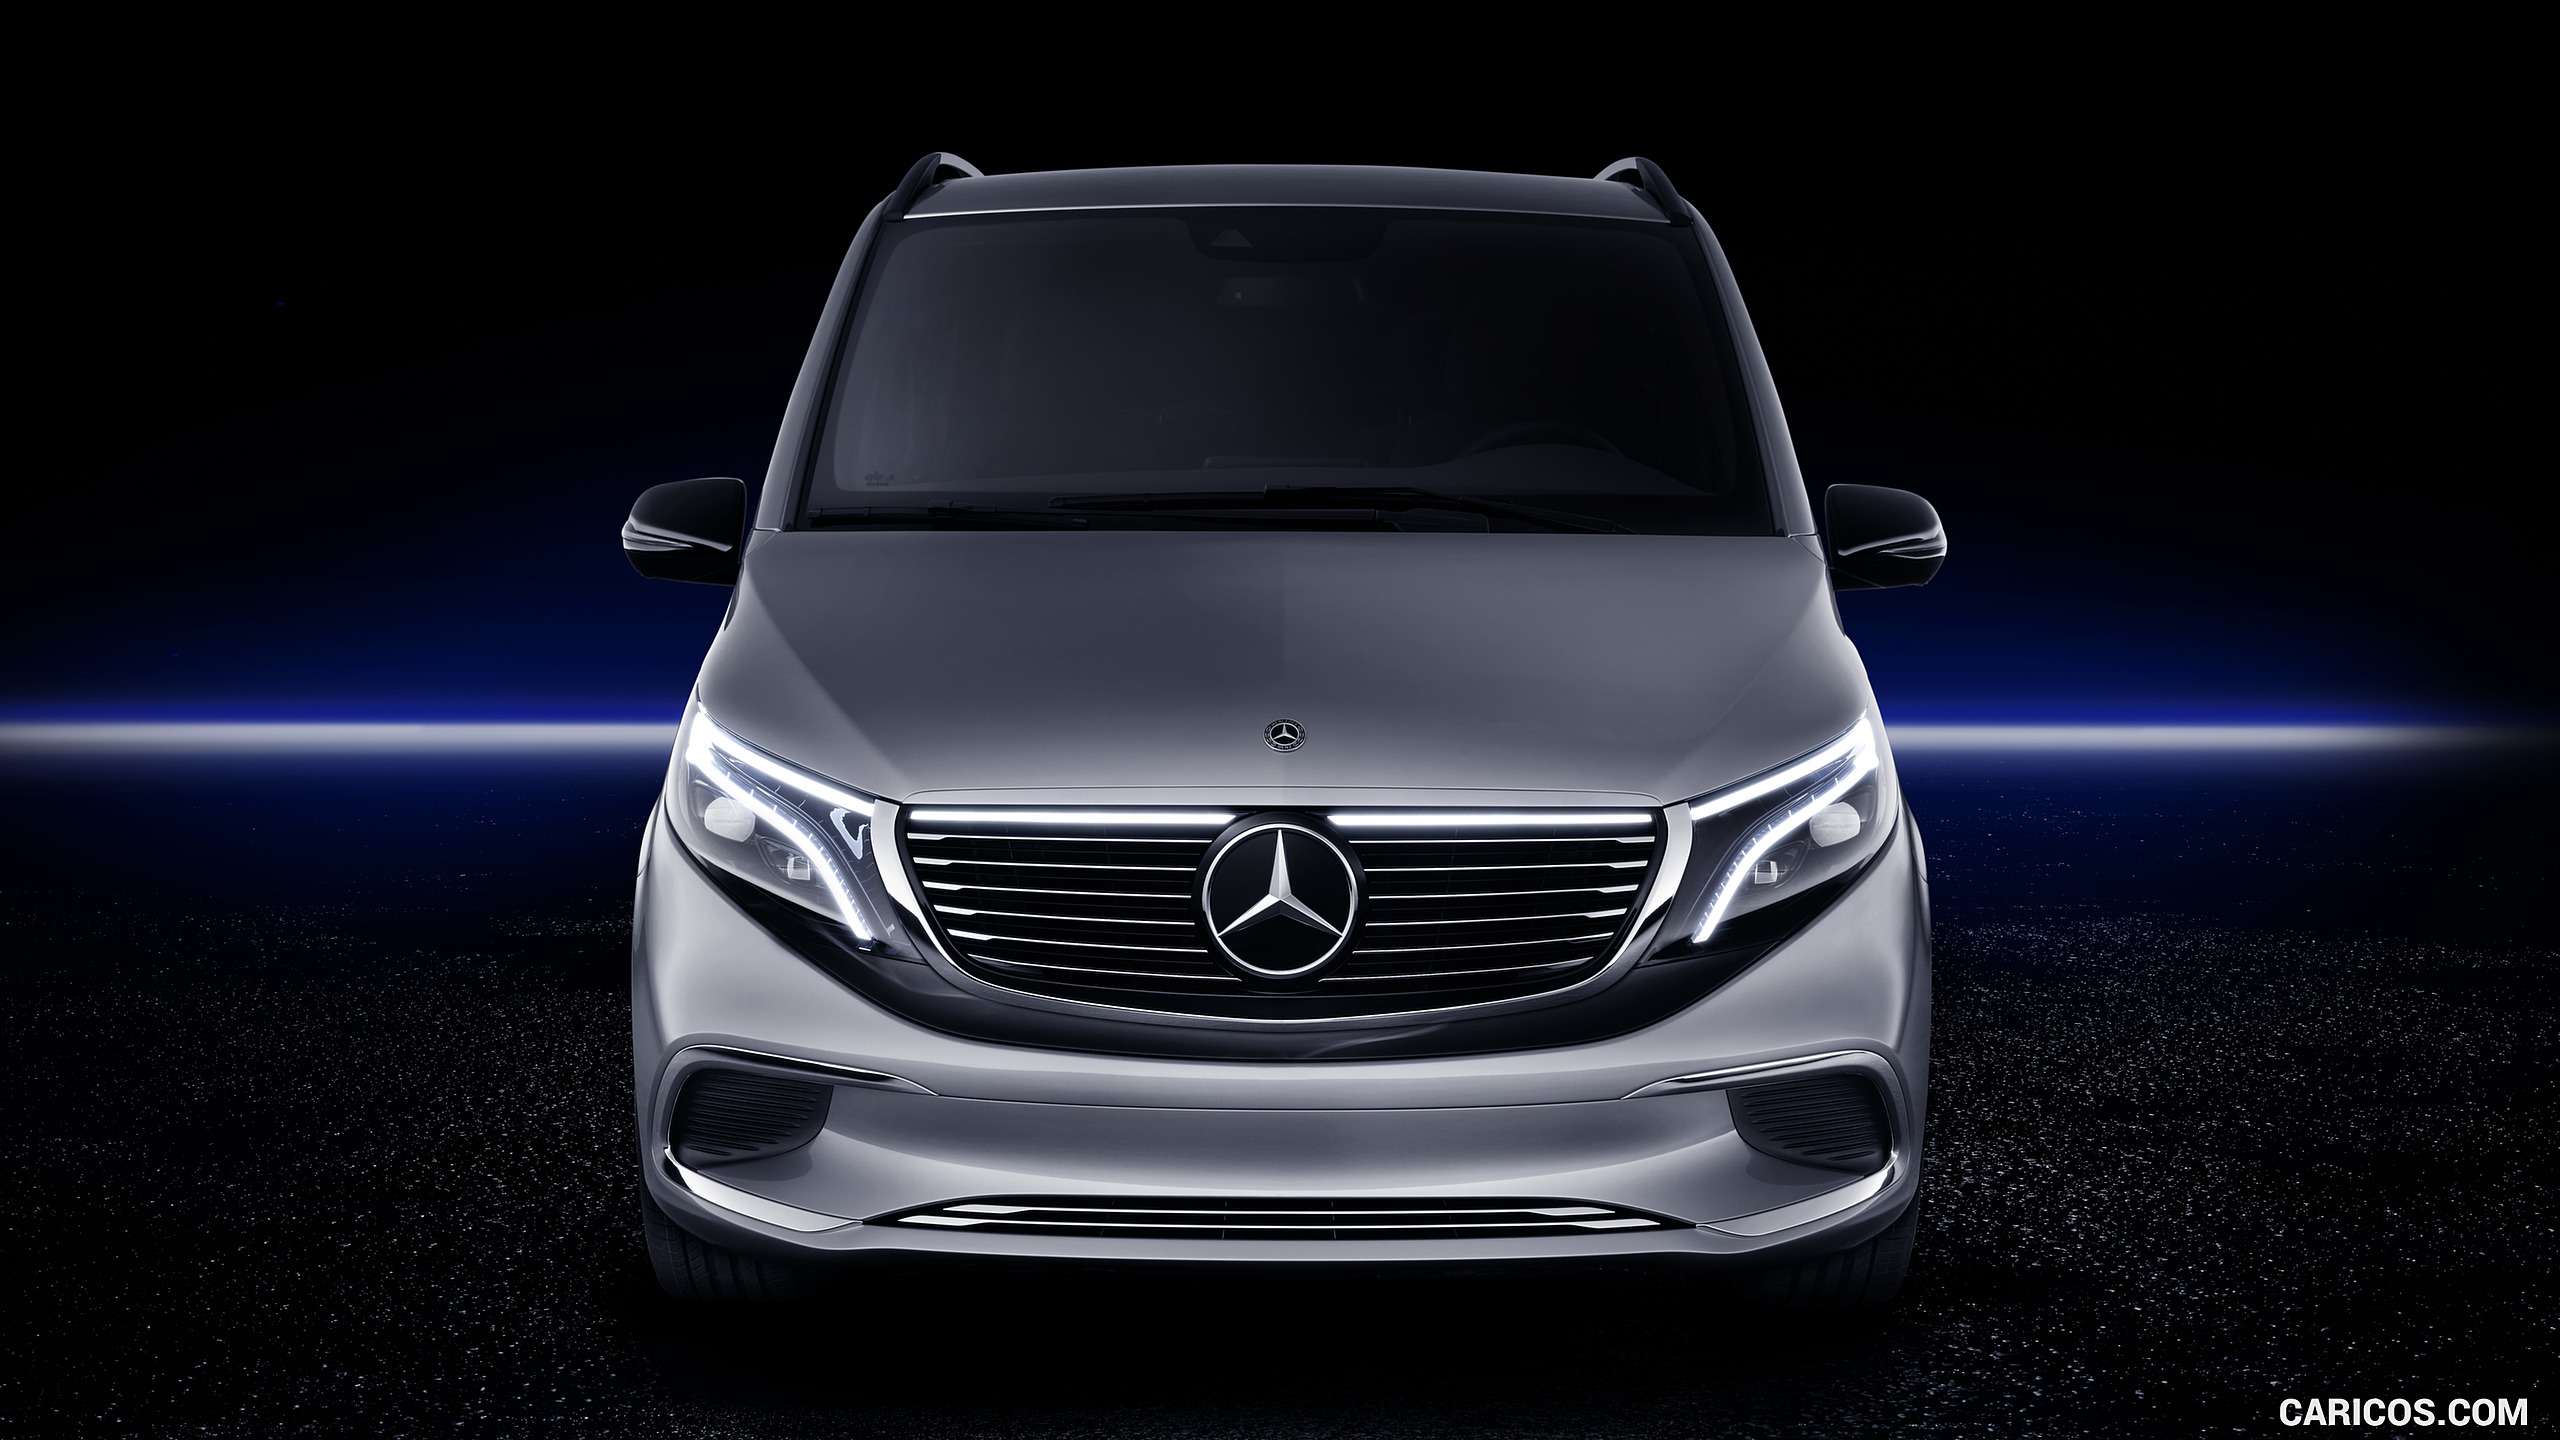 2019 Mercedes-Benz Concept EQV - Front, #4 of 34